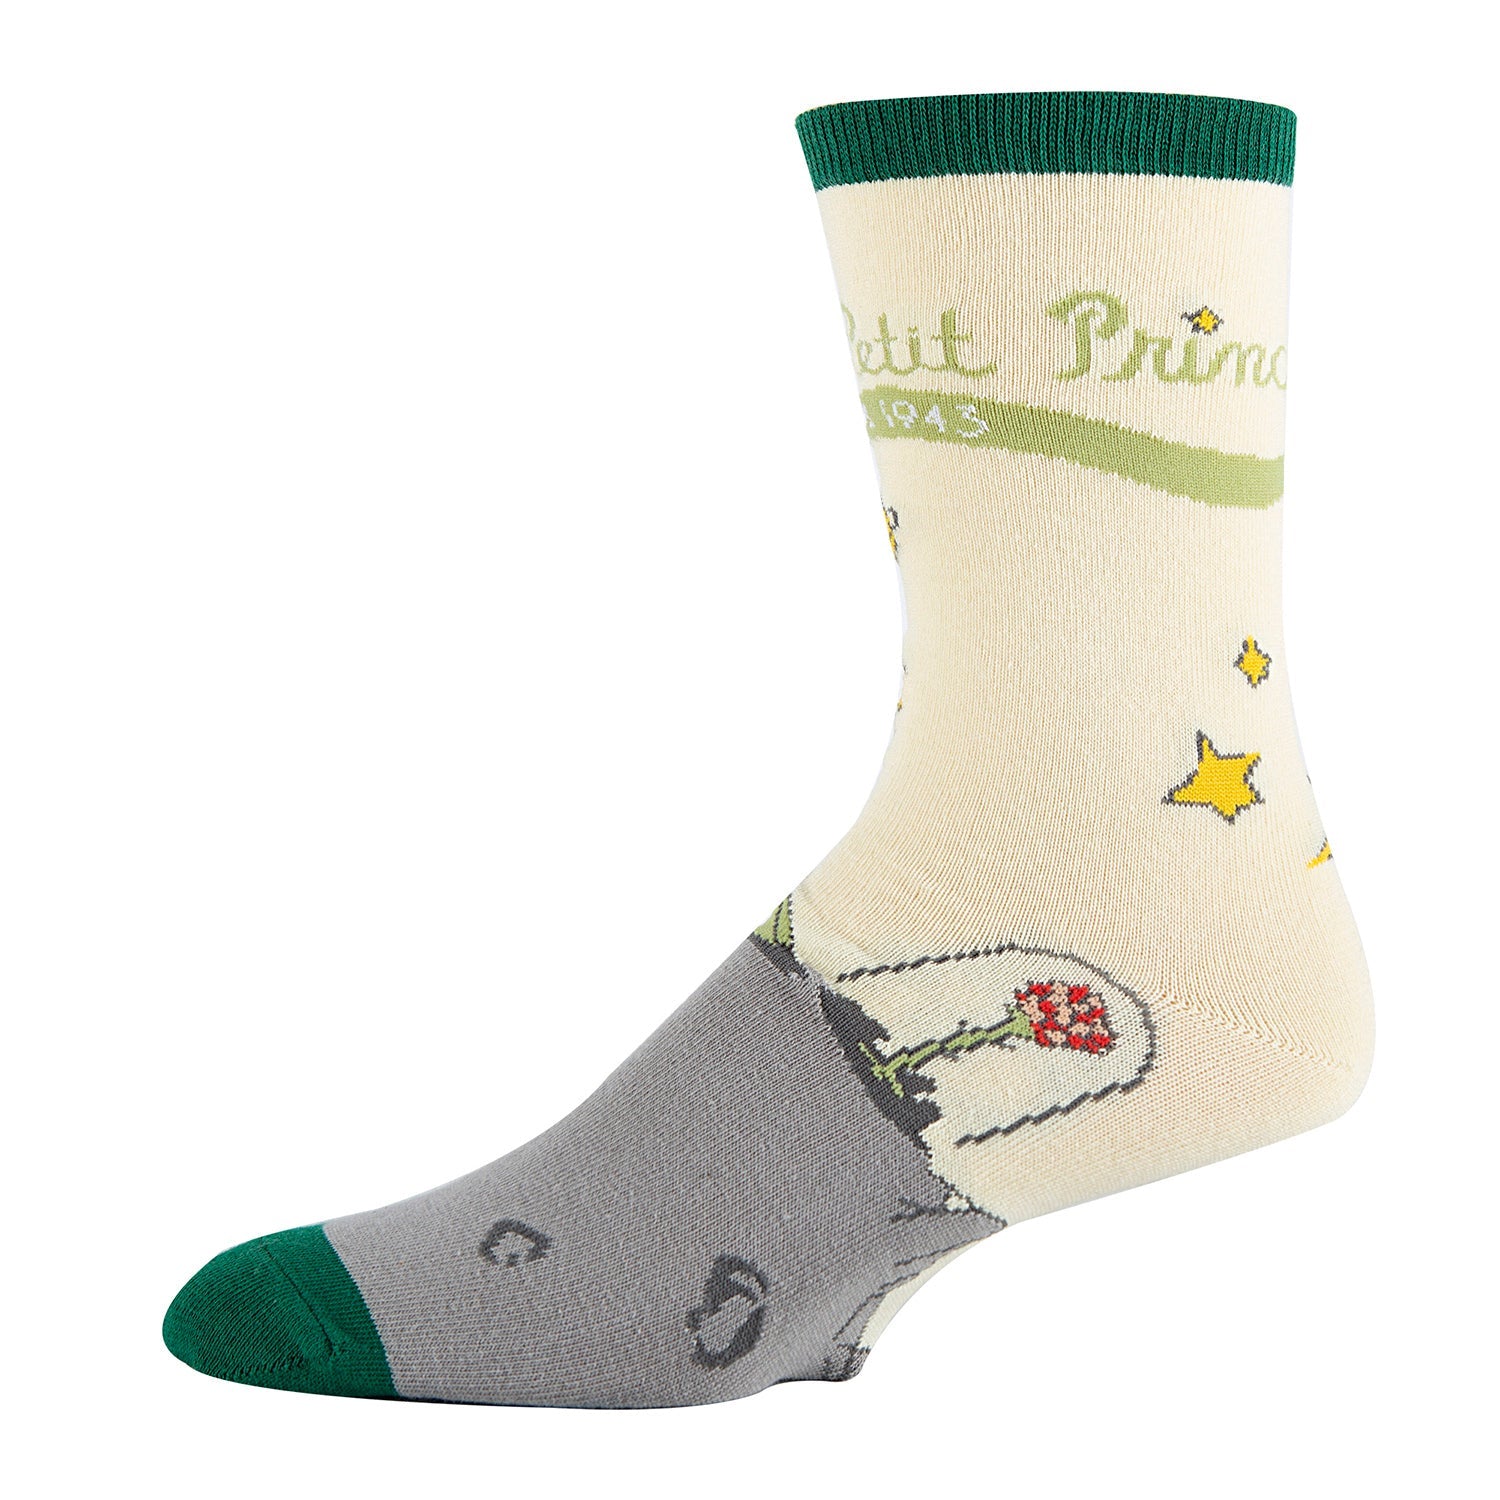 The Little Prince Socks